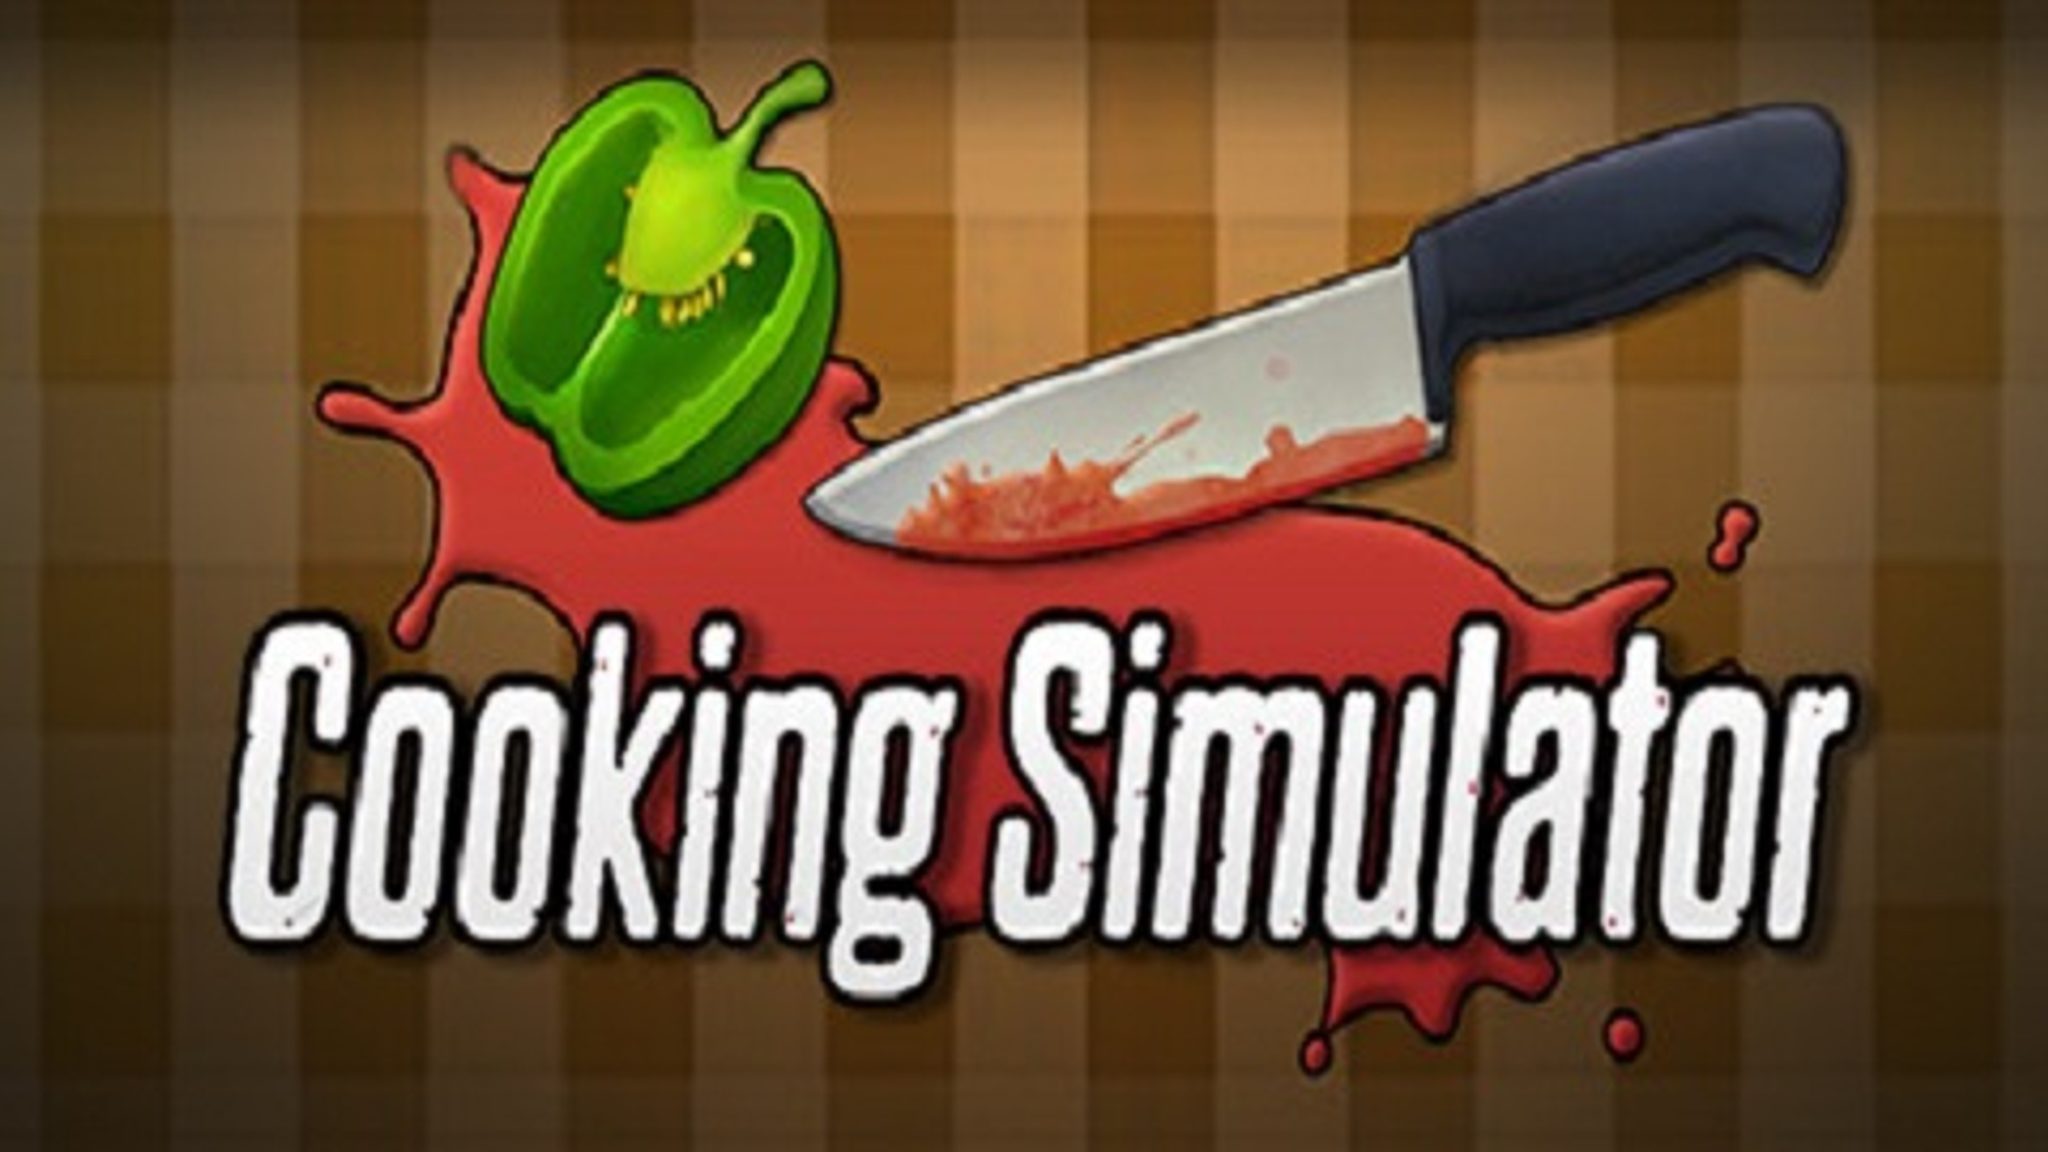 cooking simulator online free